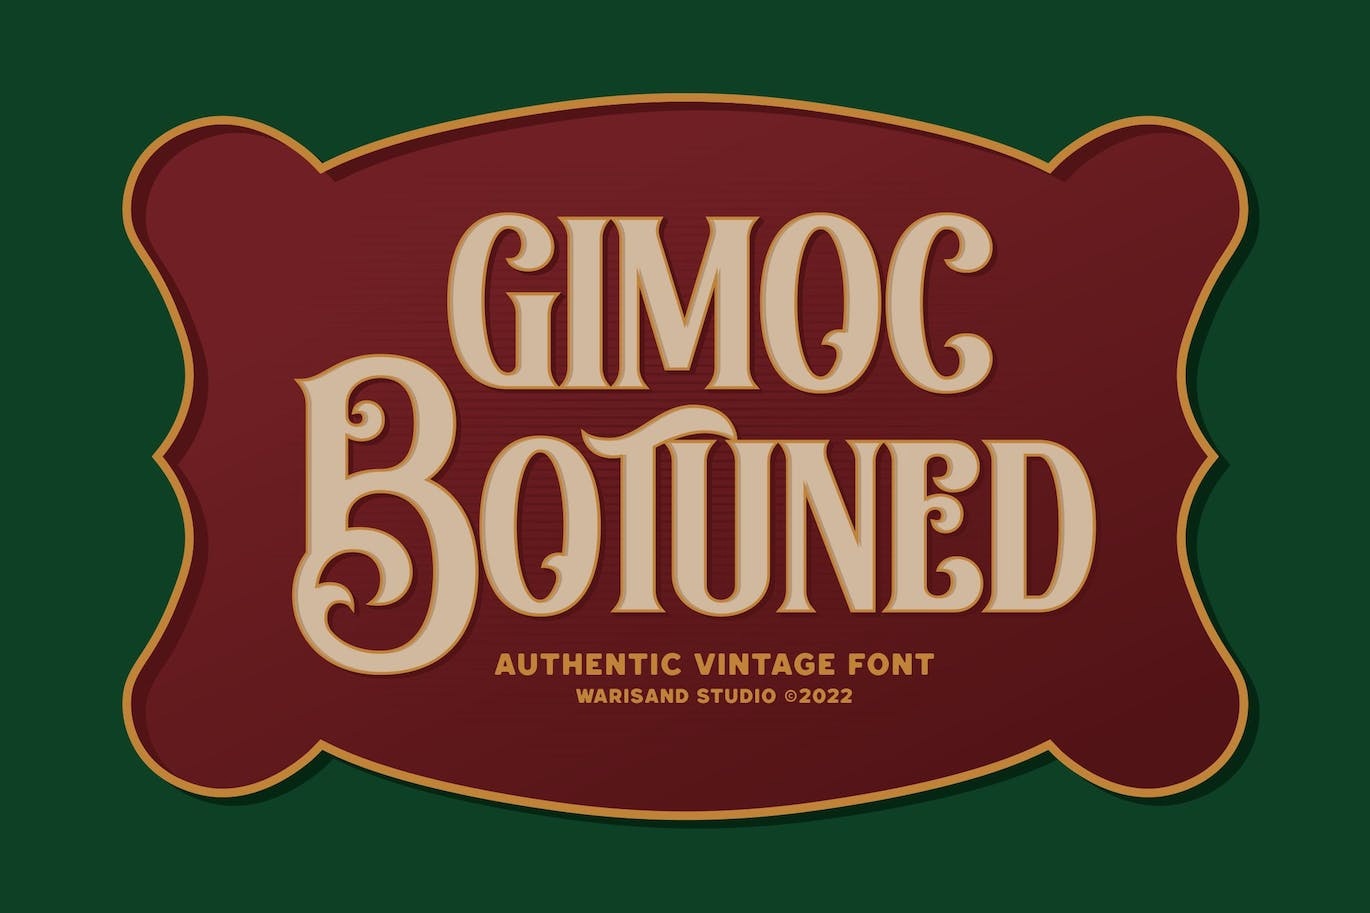 Gimoc Botuned Font